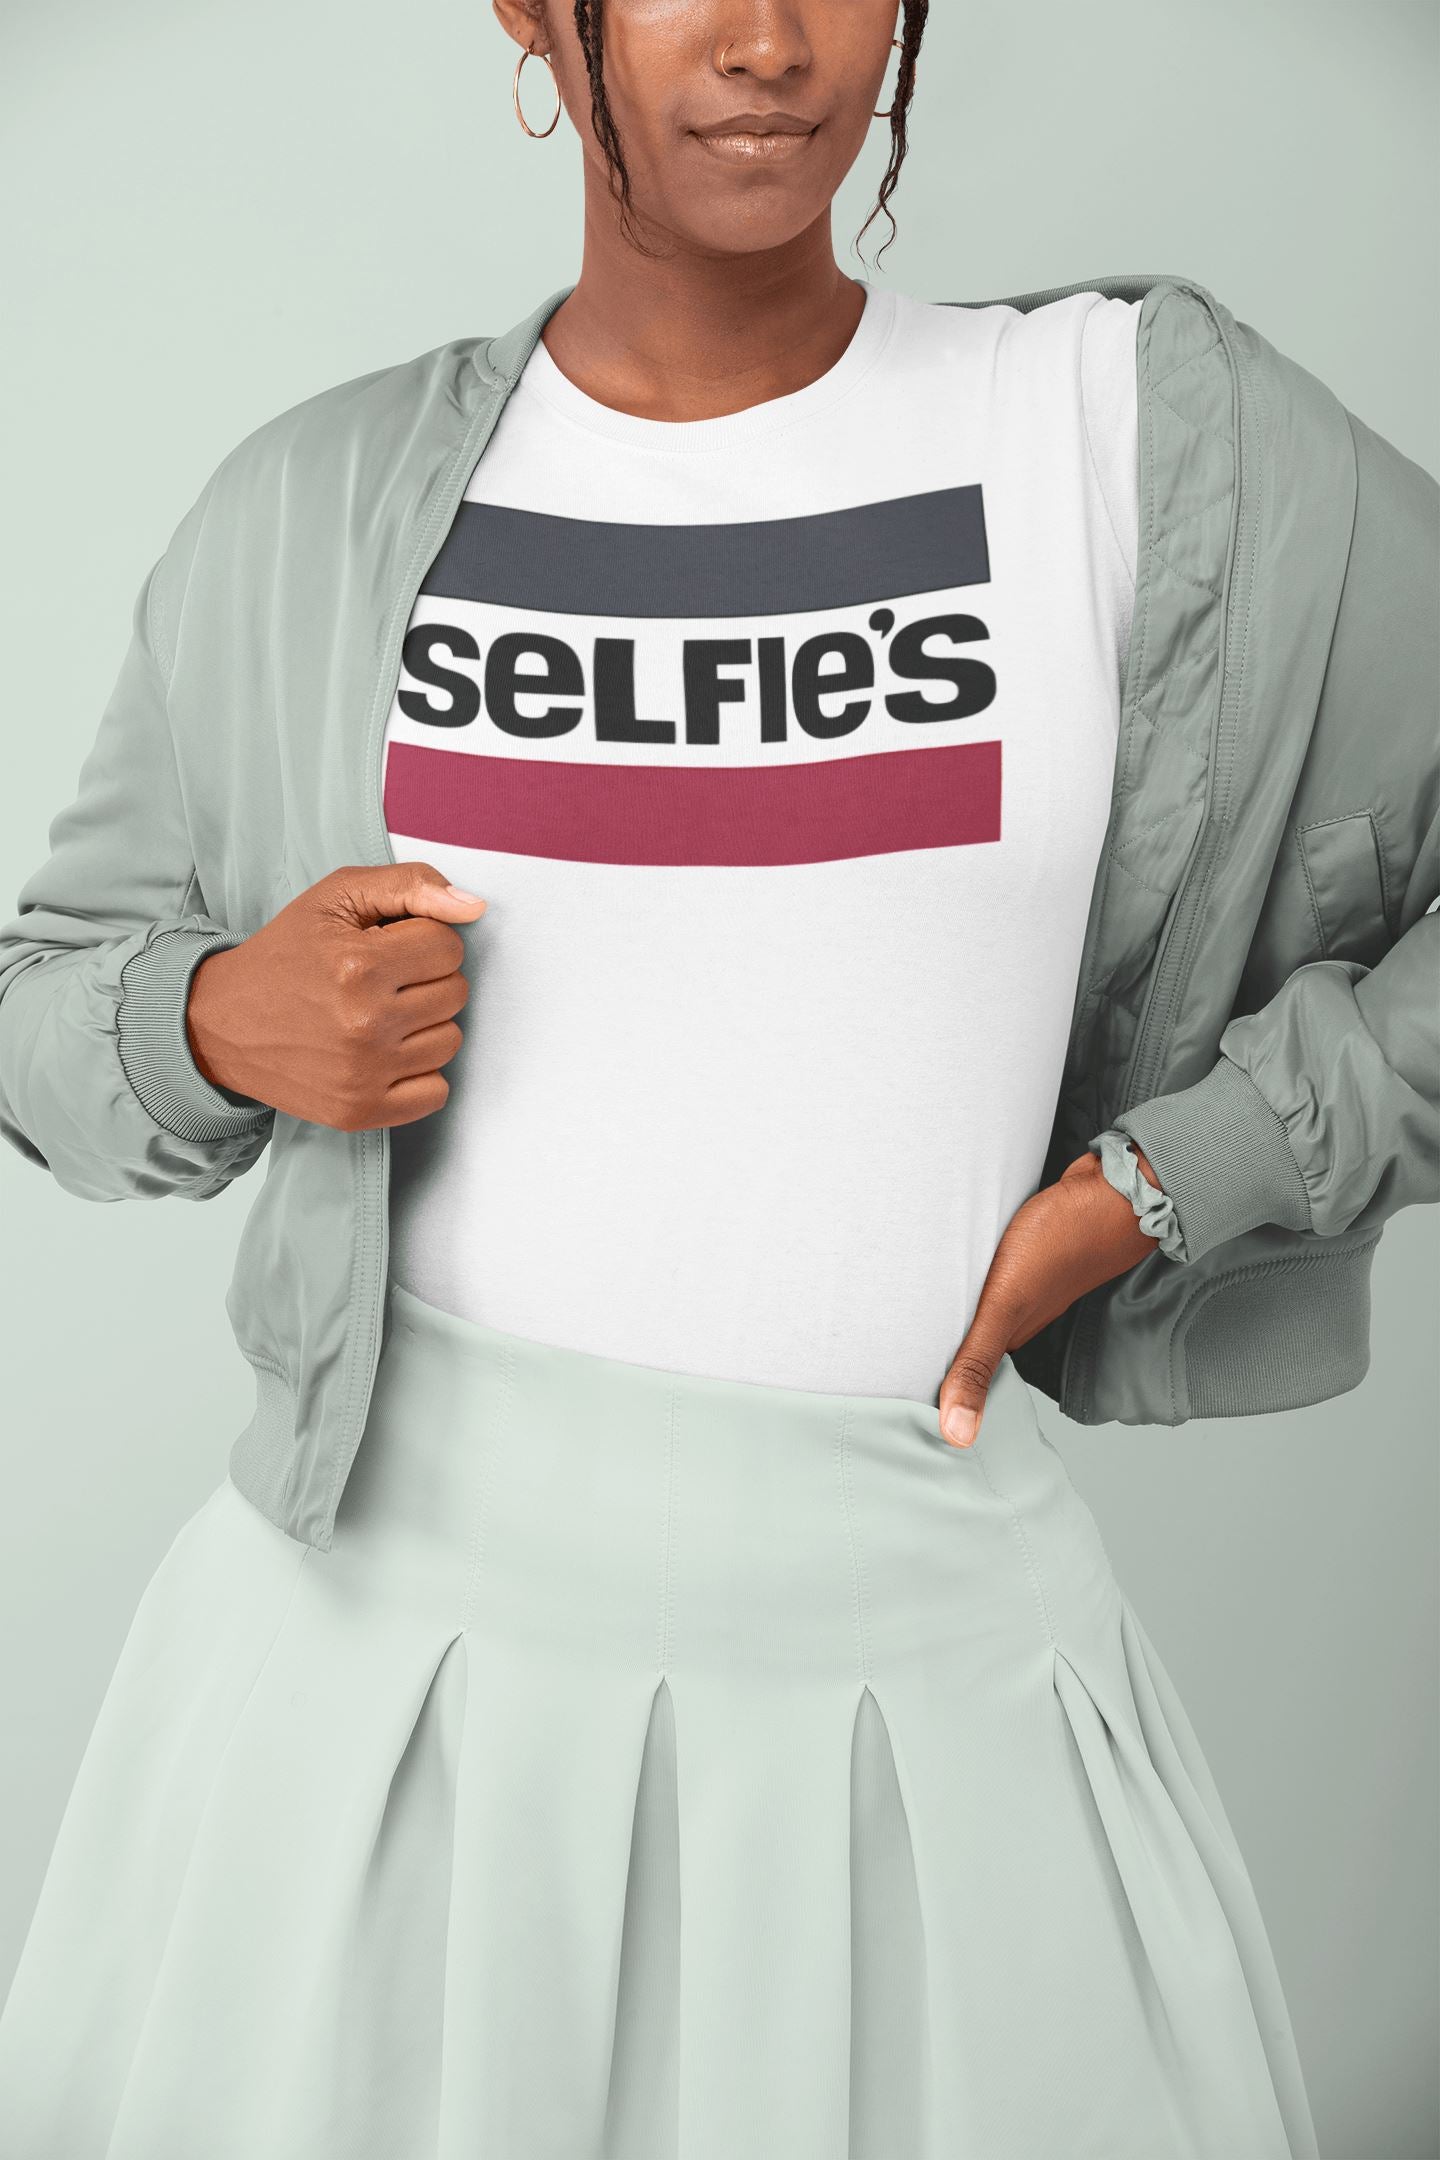 Selfie's Supreme White T Shirt for Men and Women freeshipping - Catch My  Drift India